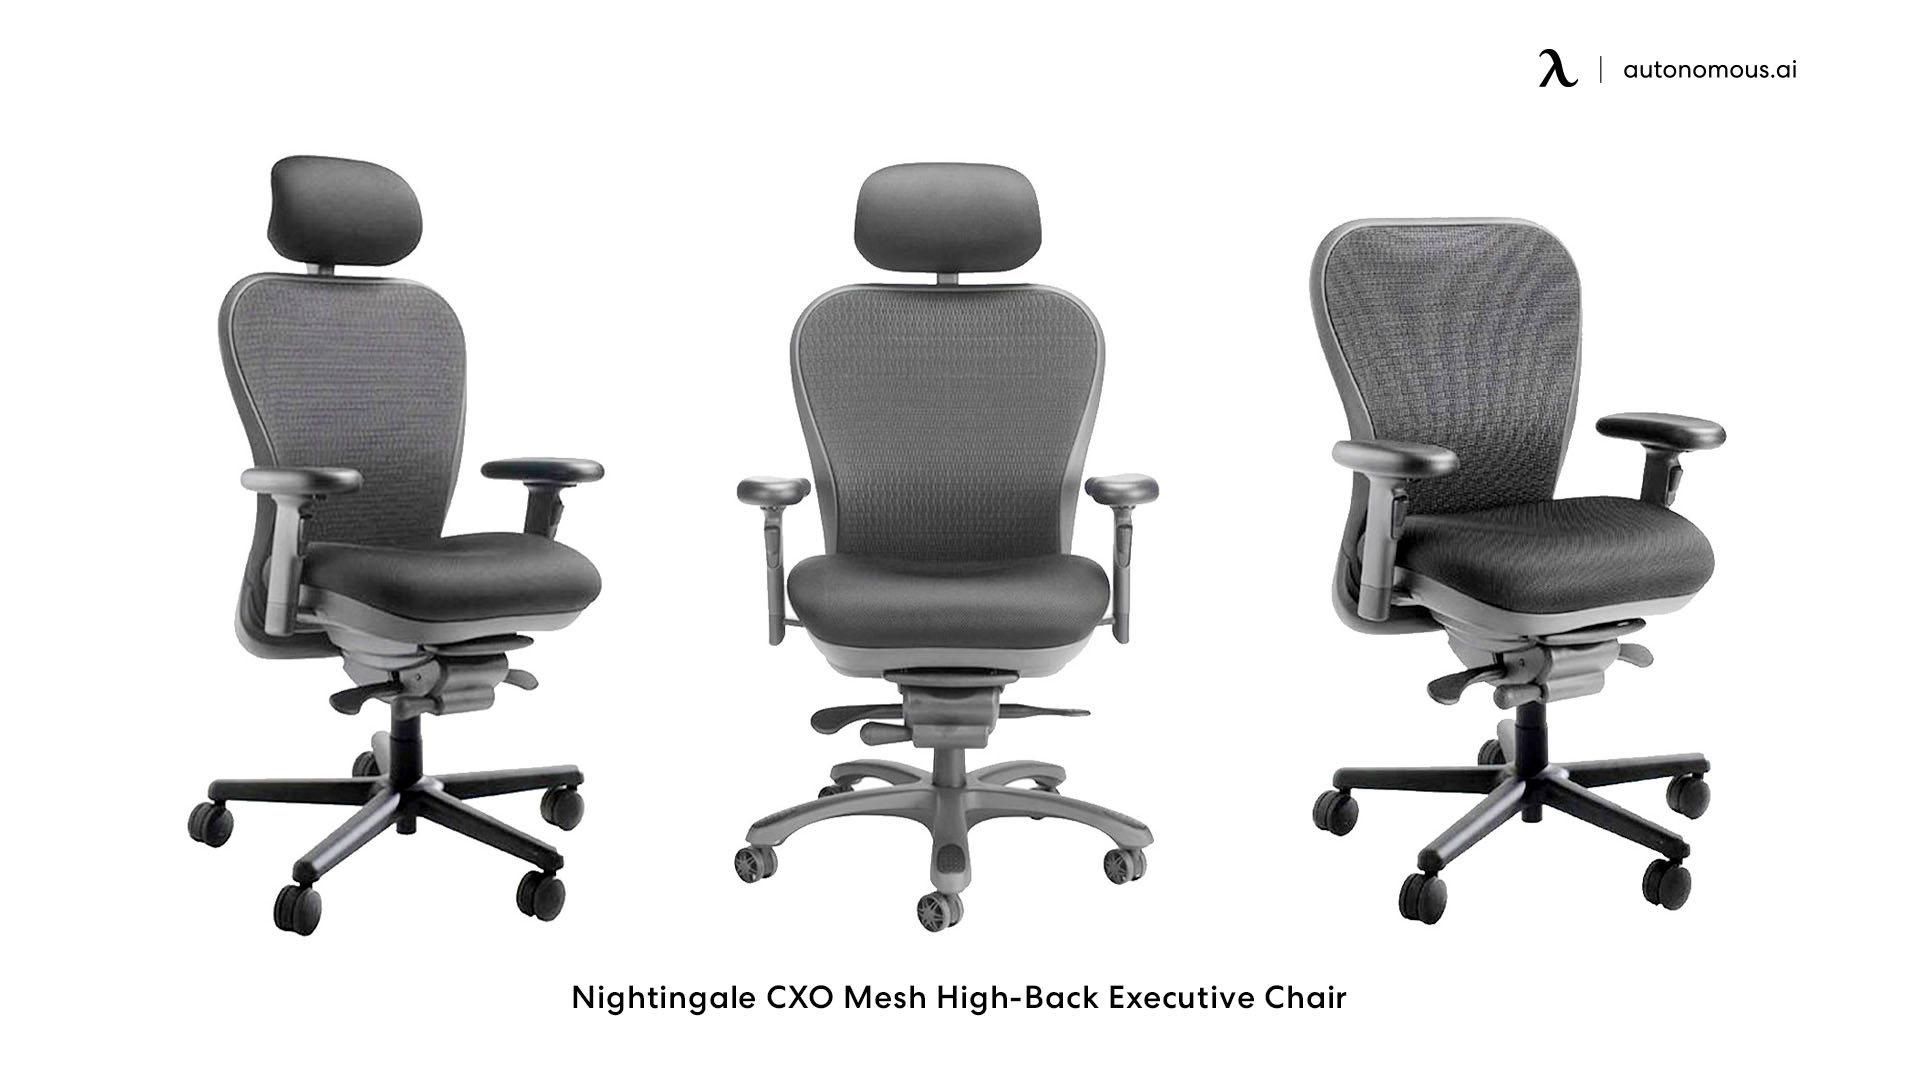 Nightingale CXO affordable mesh chair